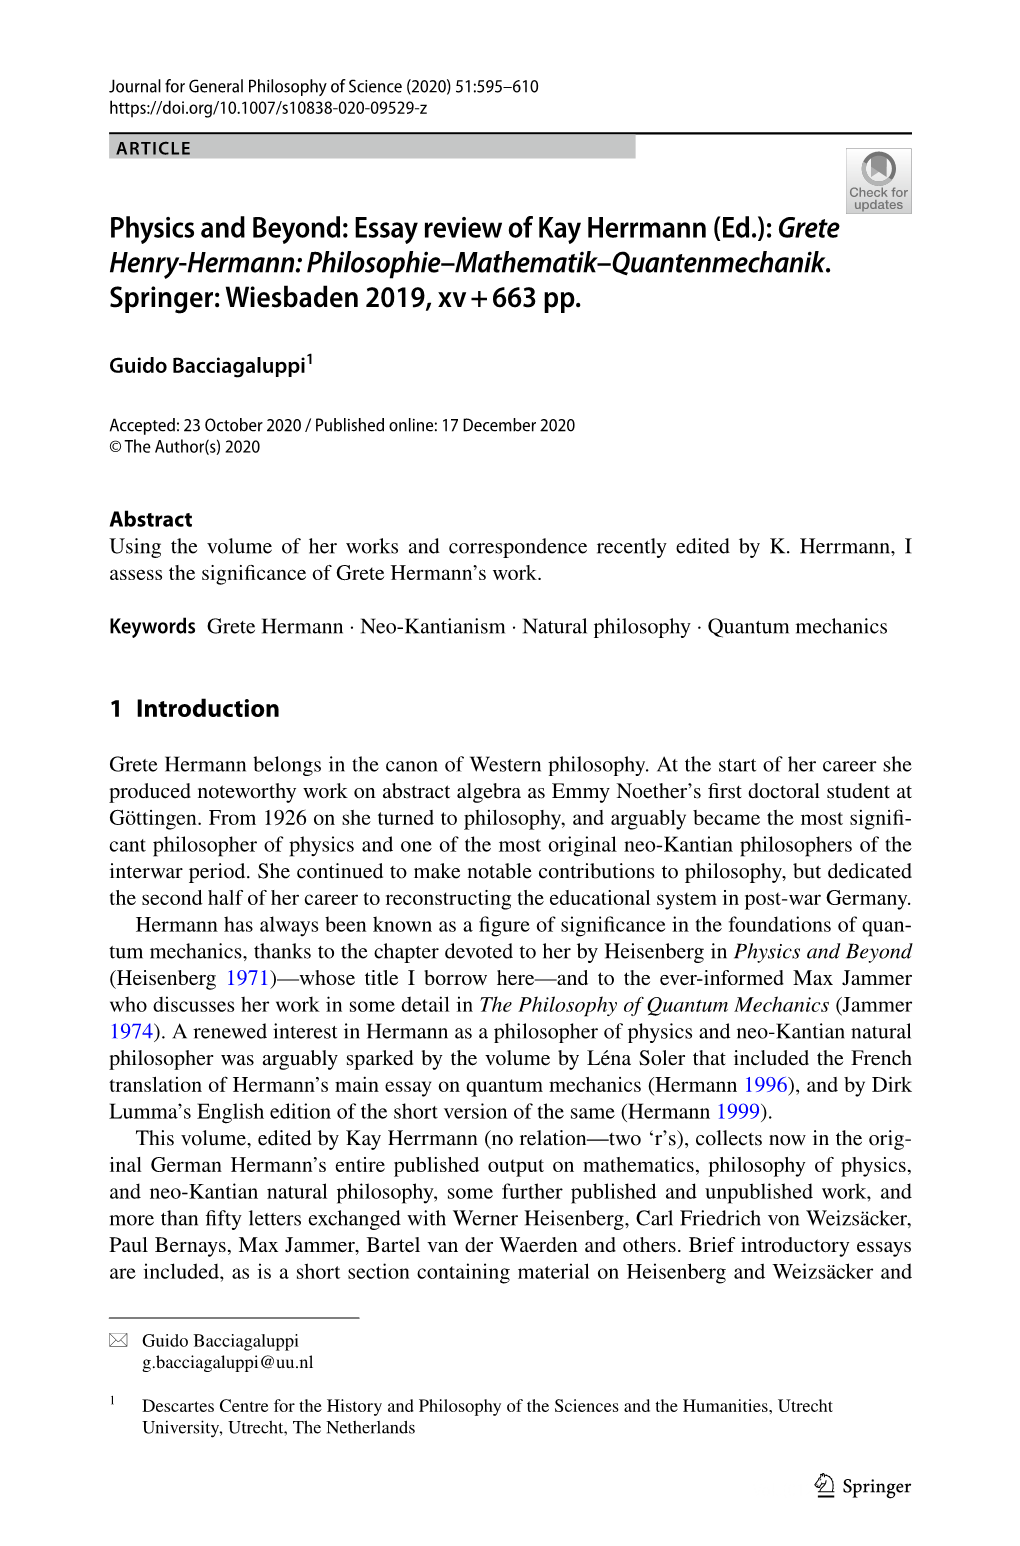 Physics and Beyond: Essay Review of Kay Herrmann (Ed.): Grete Henry-Hermann: Philosophie–Mathematik–Quantenmechanik. Springe